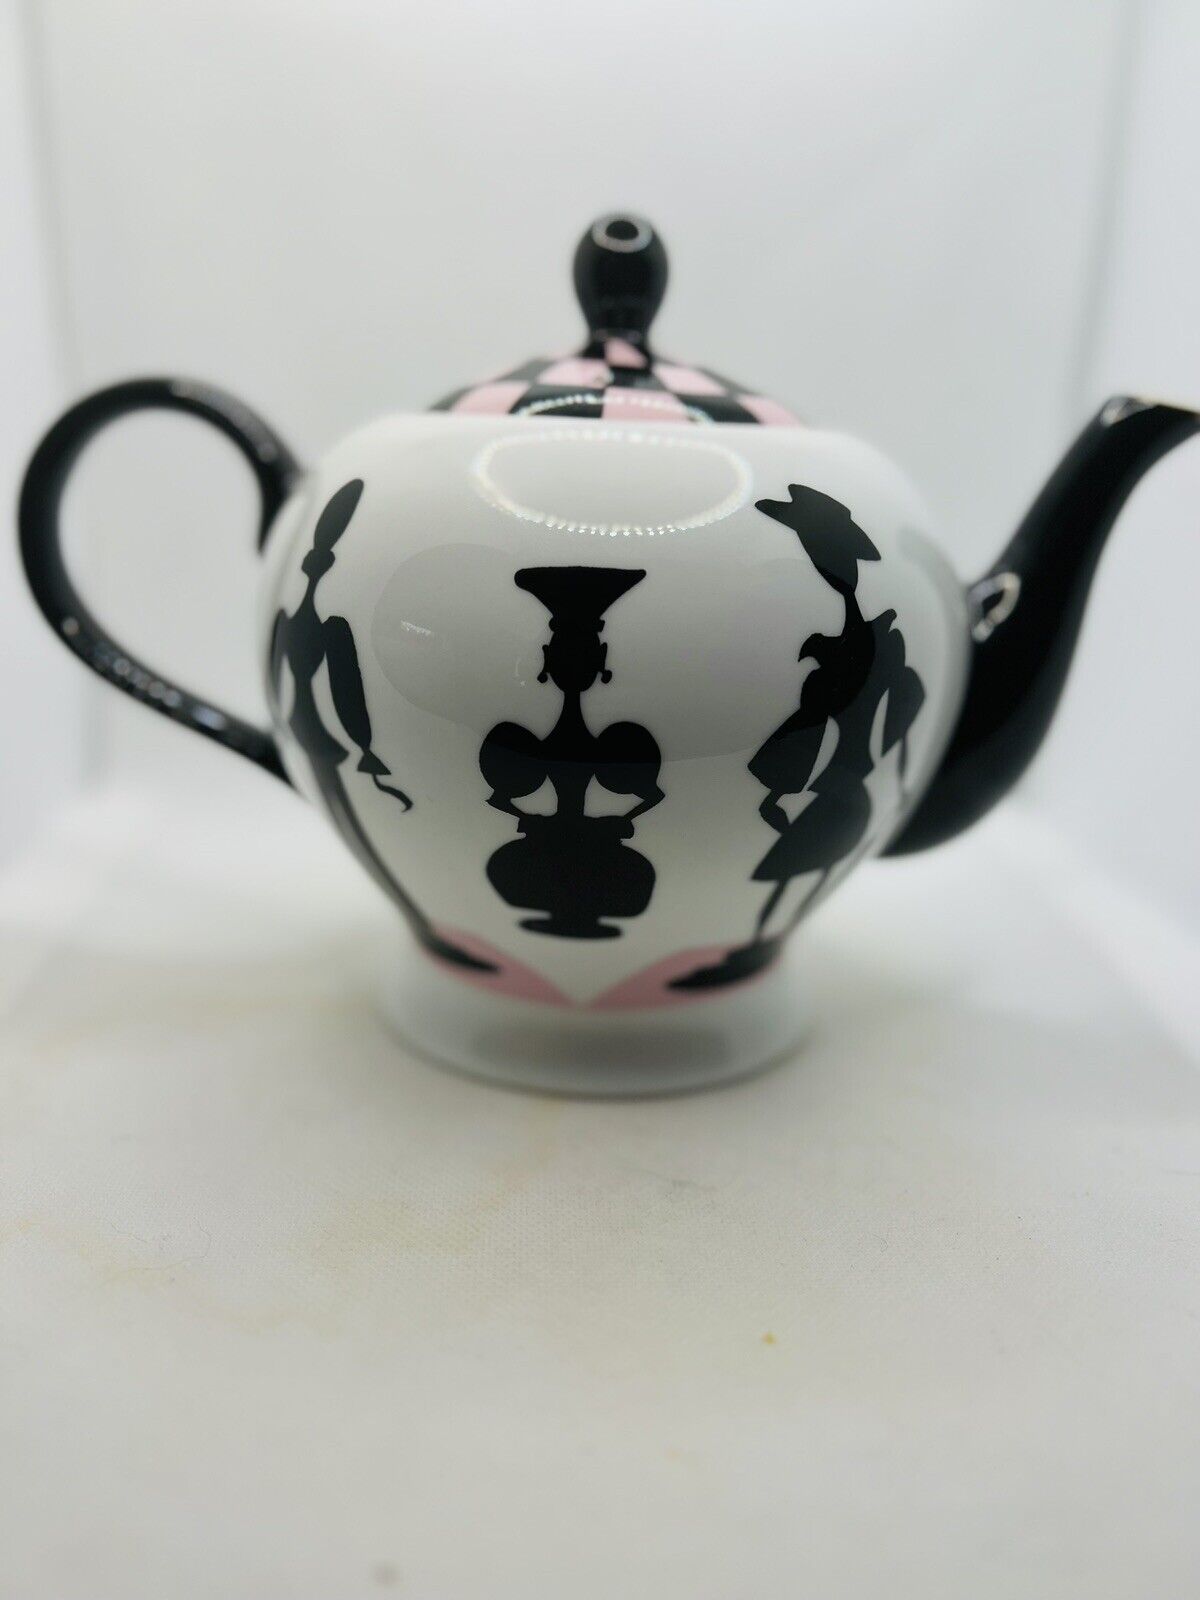 New Nordstrom R Toledo Collectible Checkered Ceramic Tea Pot Kettle Teapot W Lid